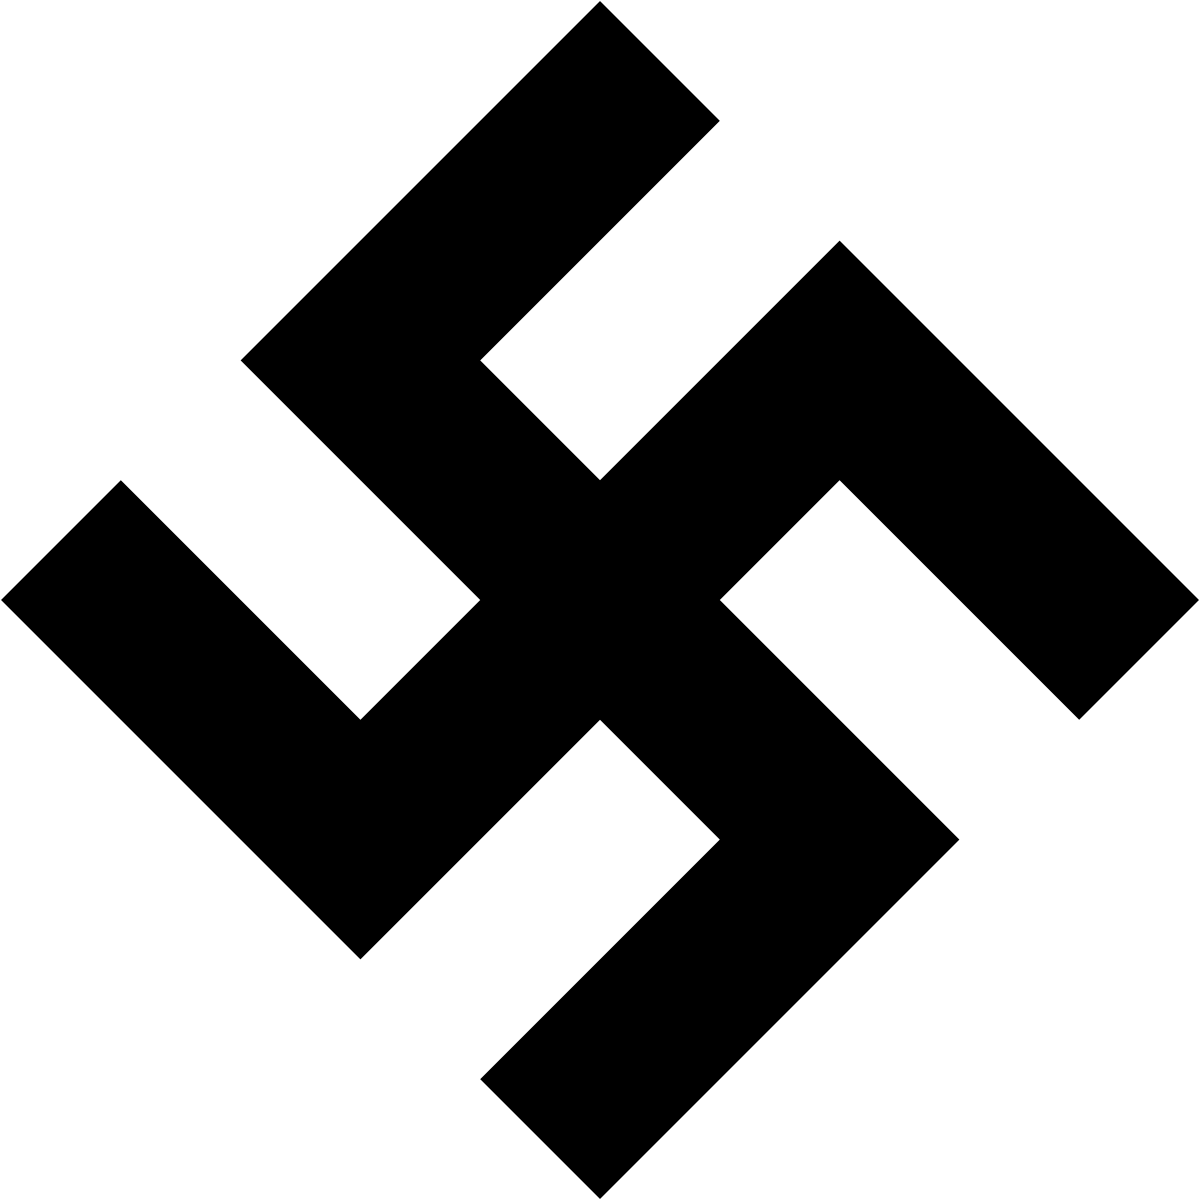 The SS Logo - Nazi symbolism